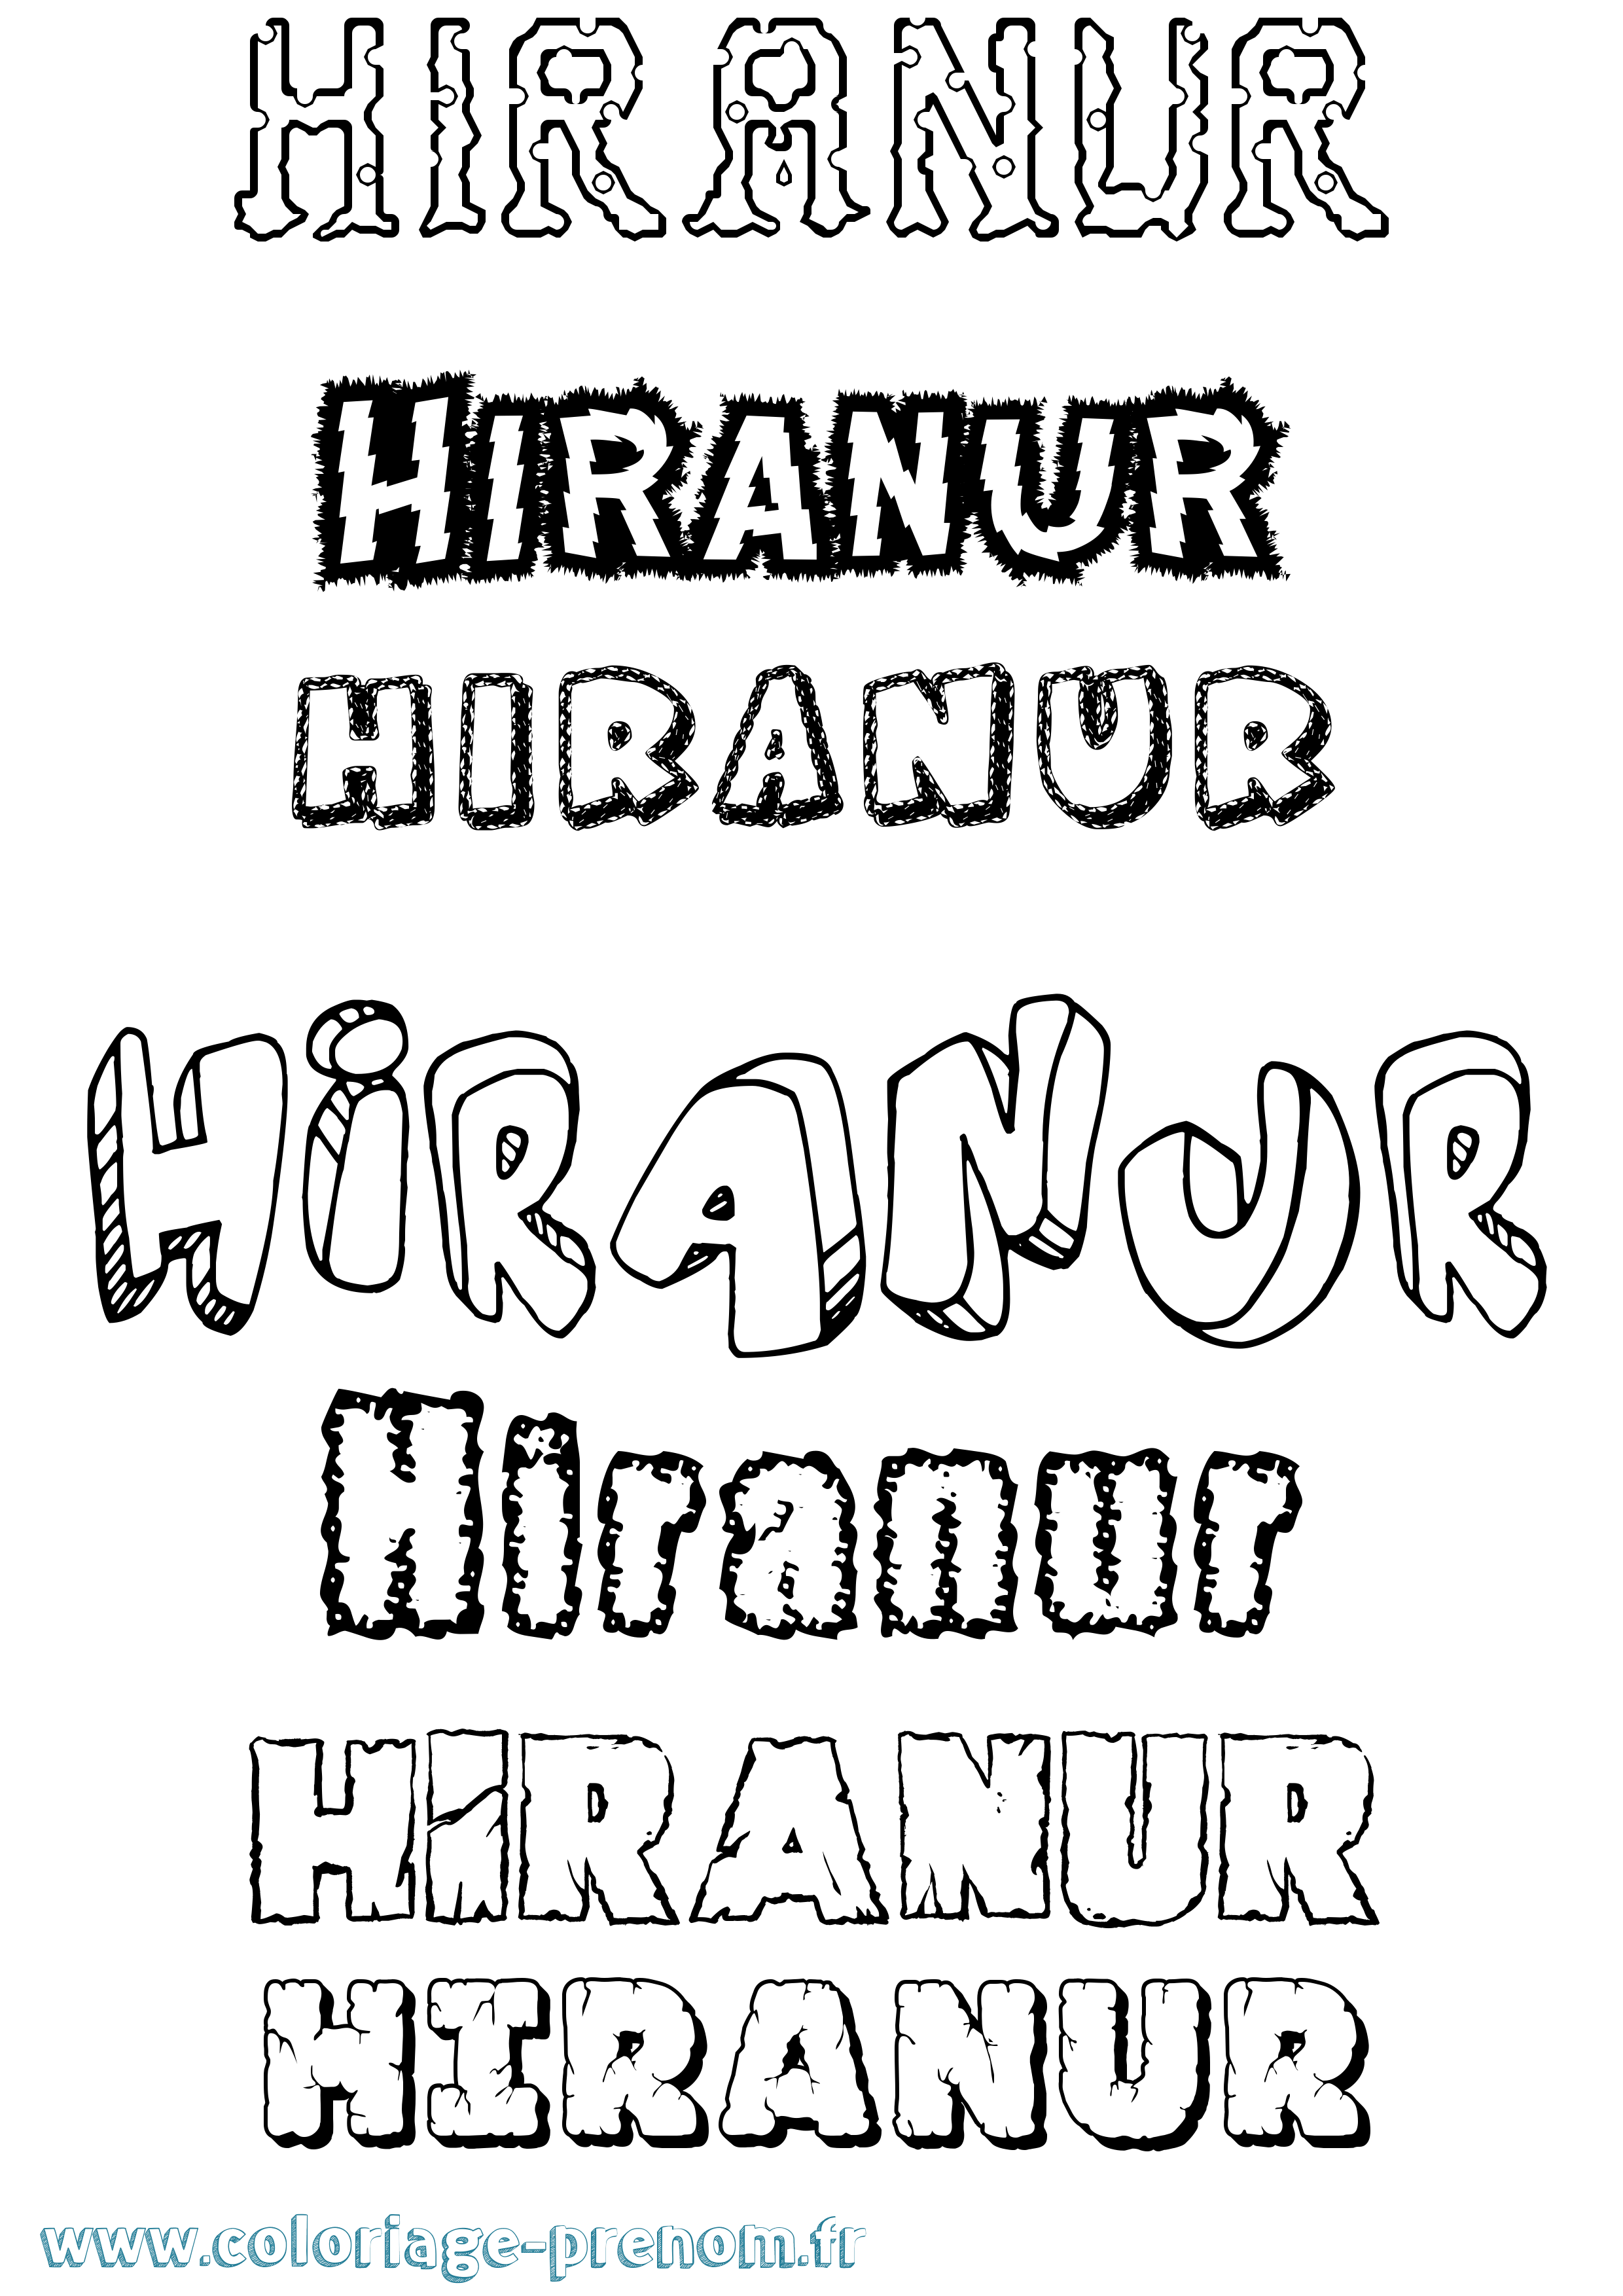 Coloriage prénom Hiranur Destructuré